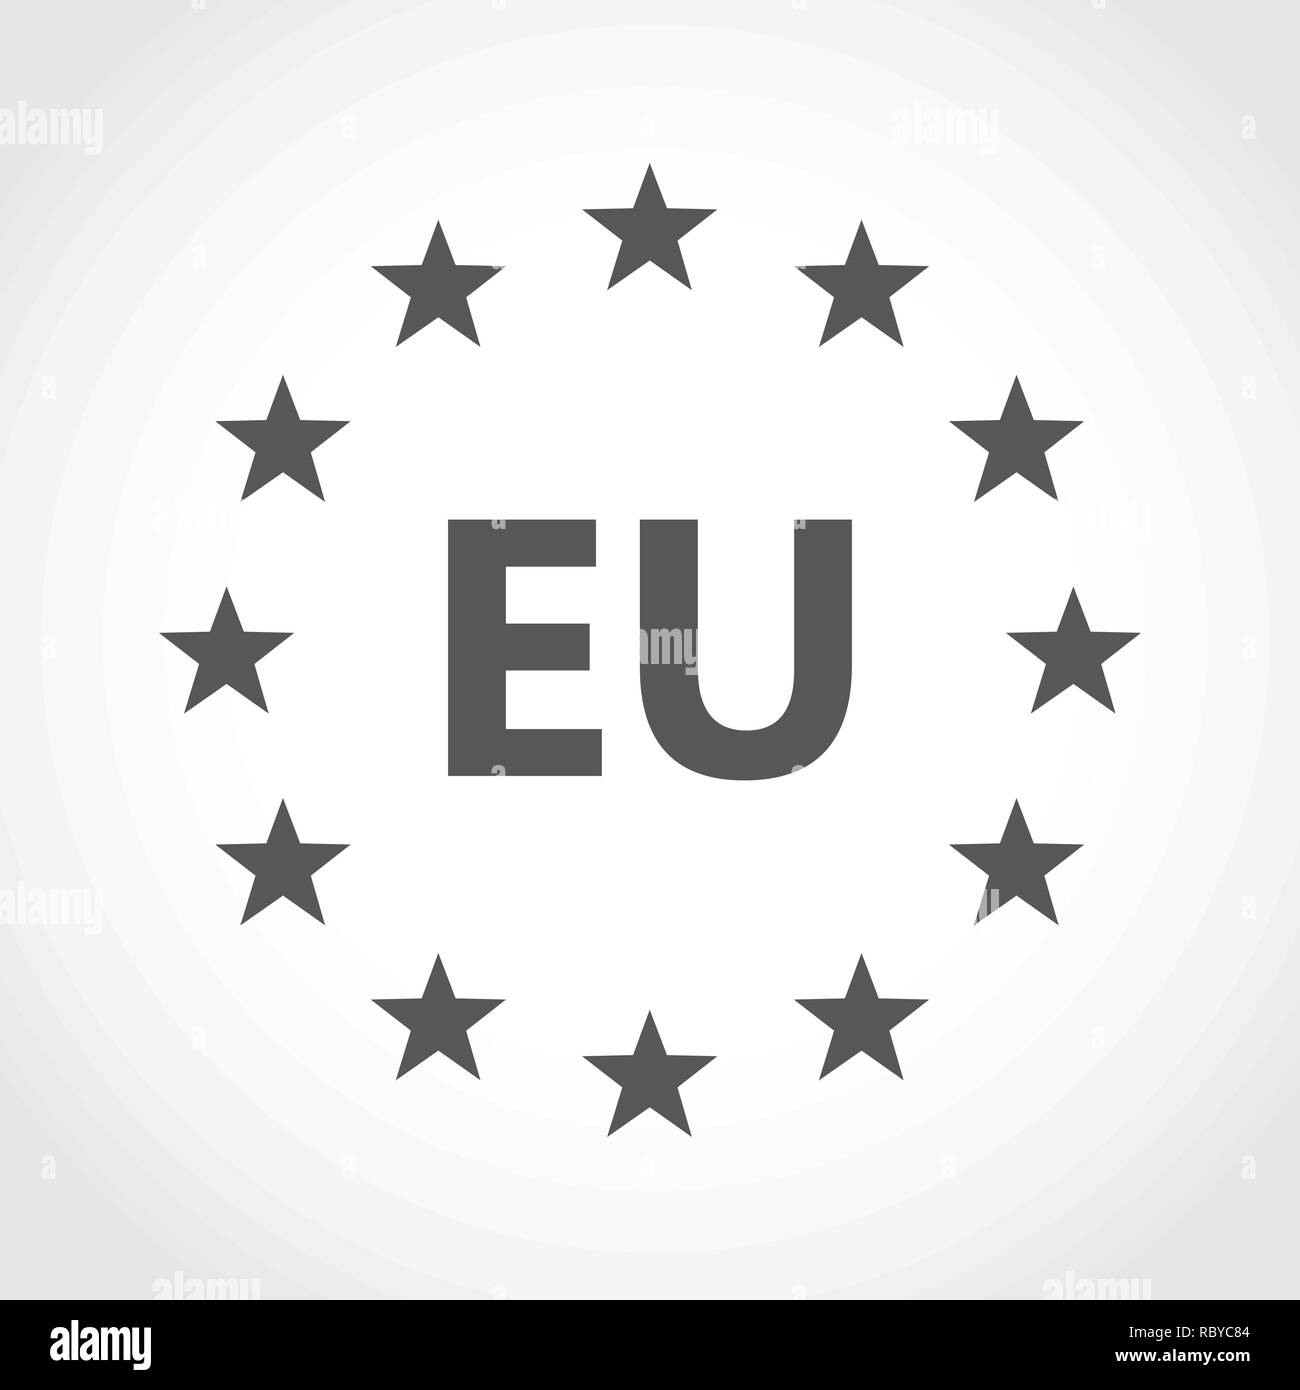 Free Images : star, symbol, nations, eu flag, blue yellow, european ...